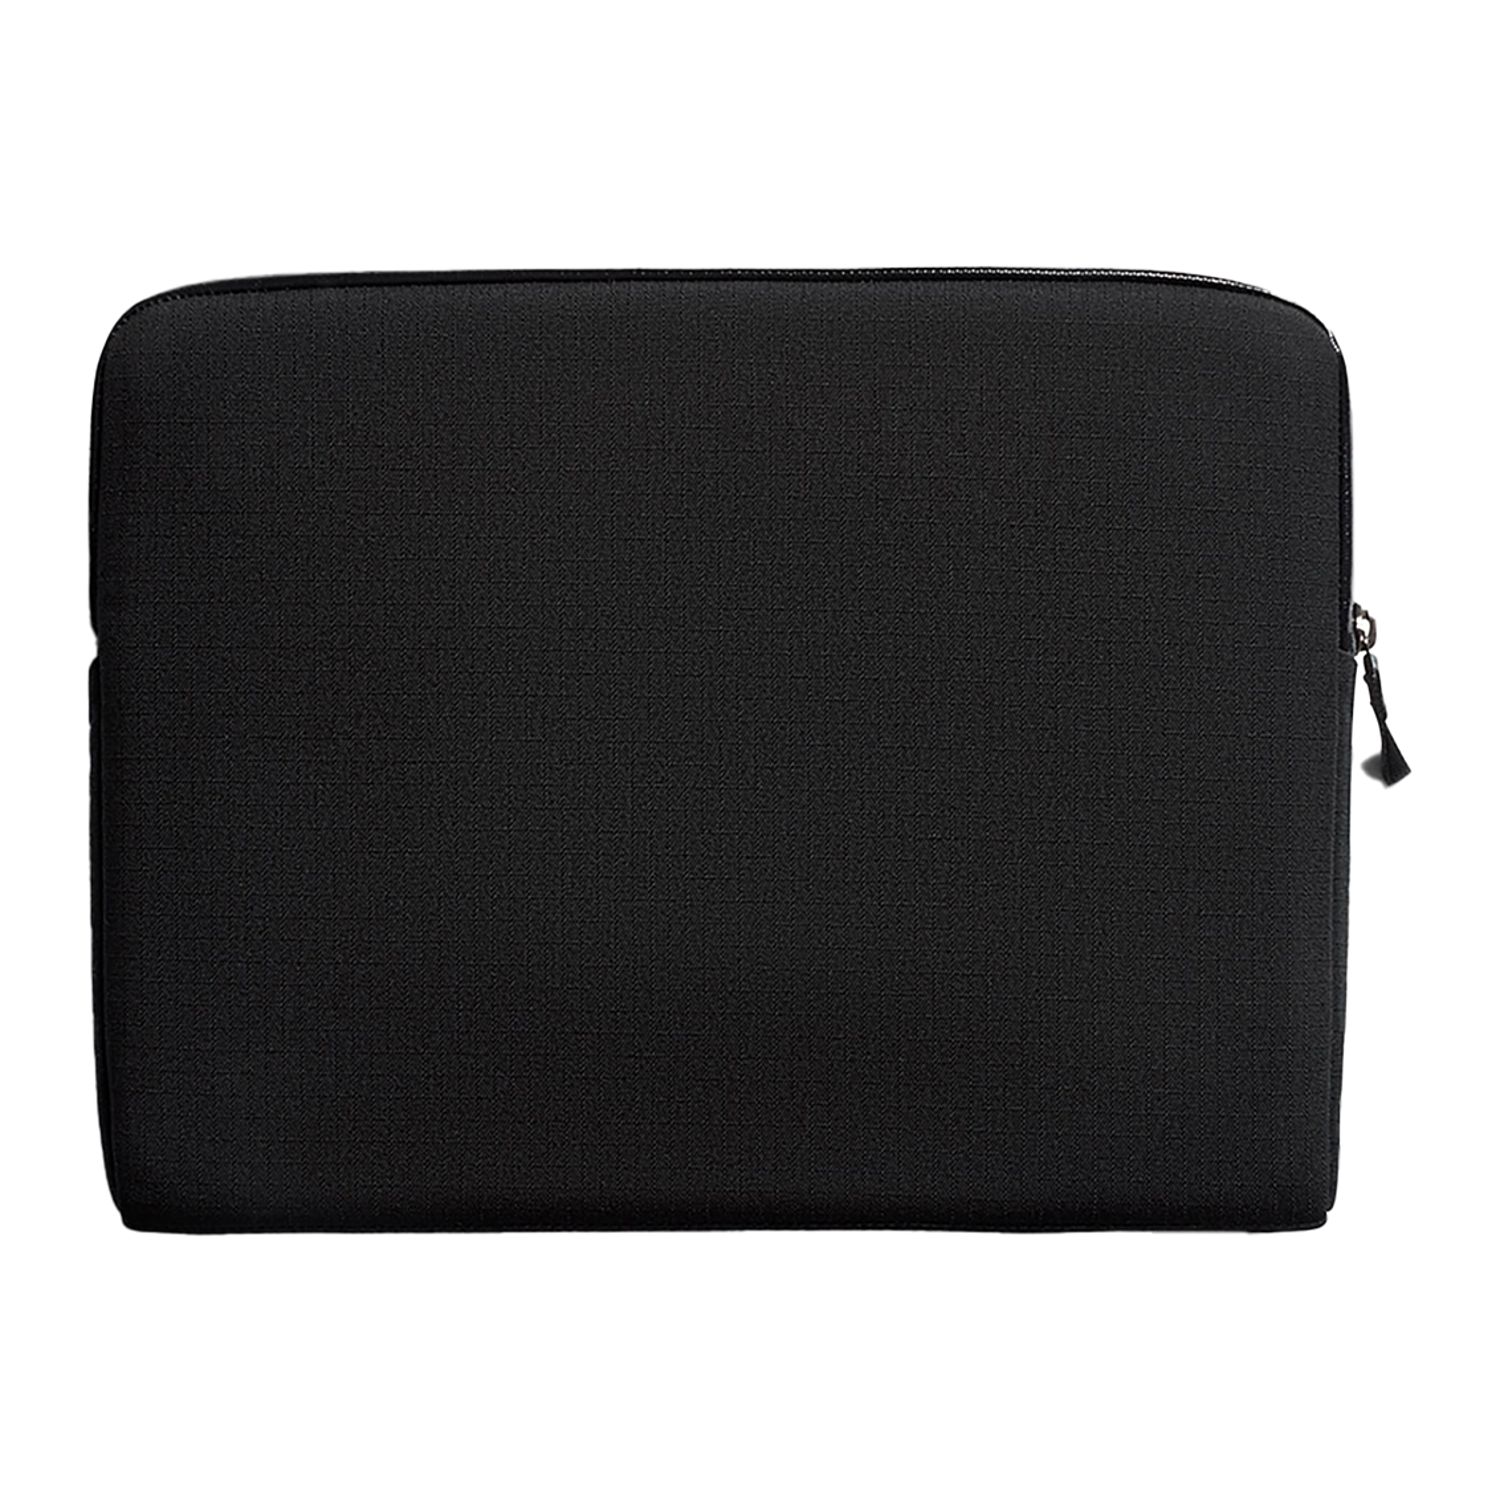 Custom Branded Bellroy Bags - Black